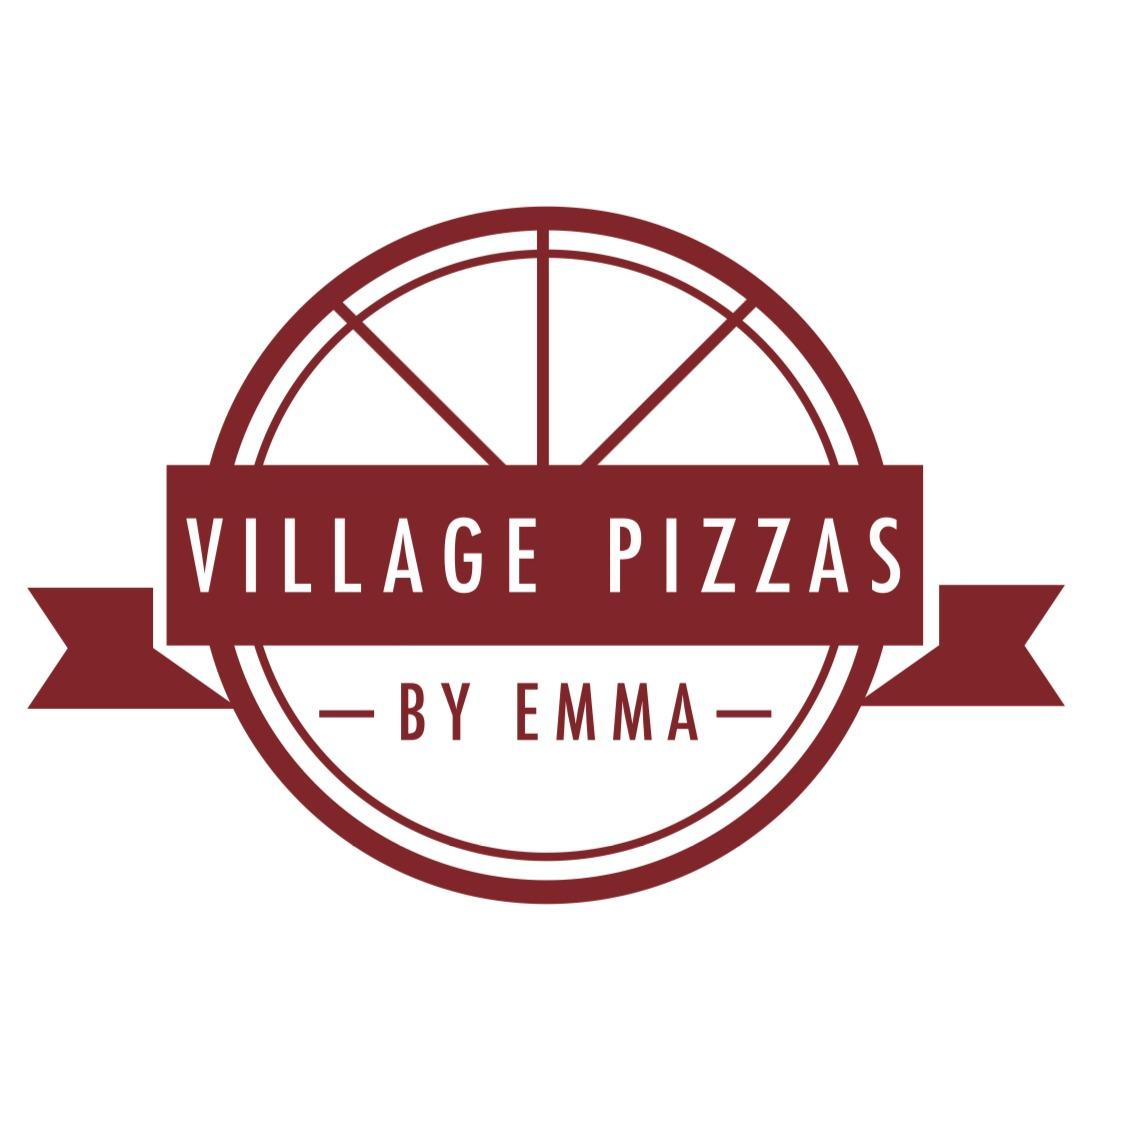 Village Pizzas By Emma - Sarasota, FL 34239 - (941)373-1878 | ShowMeLocal.com